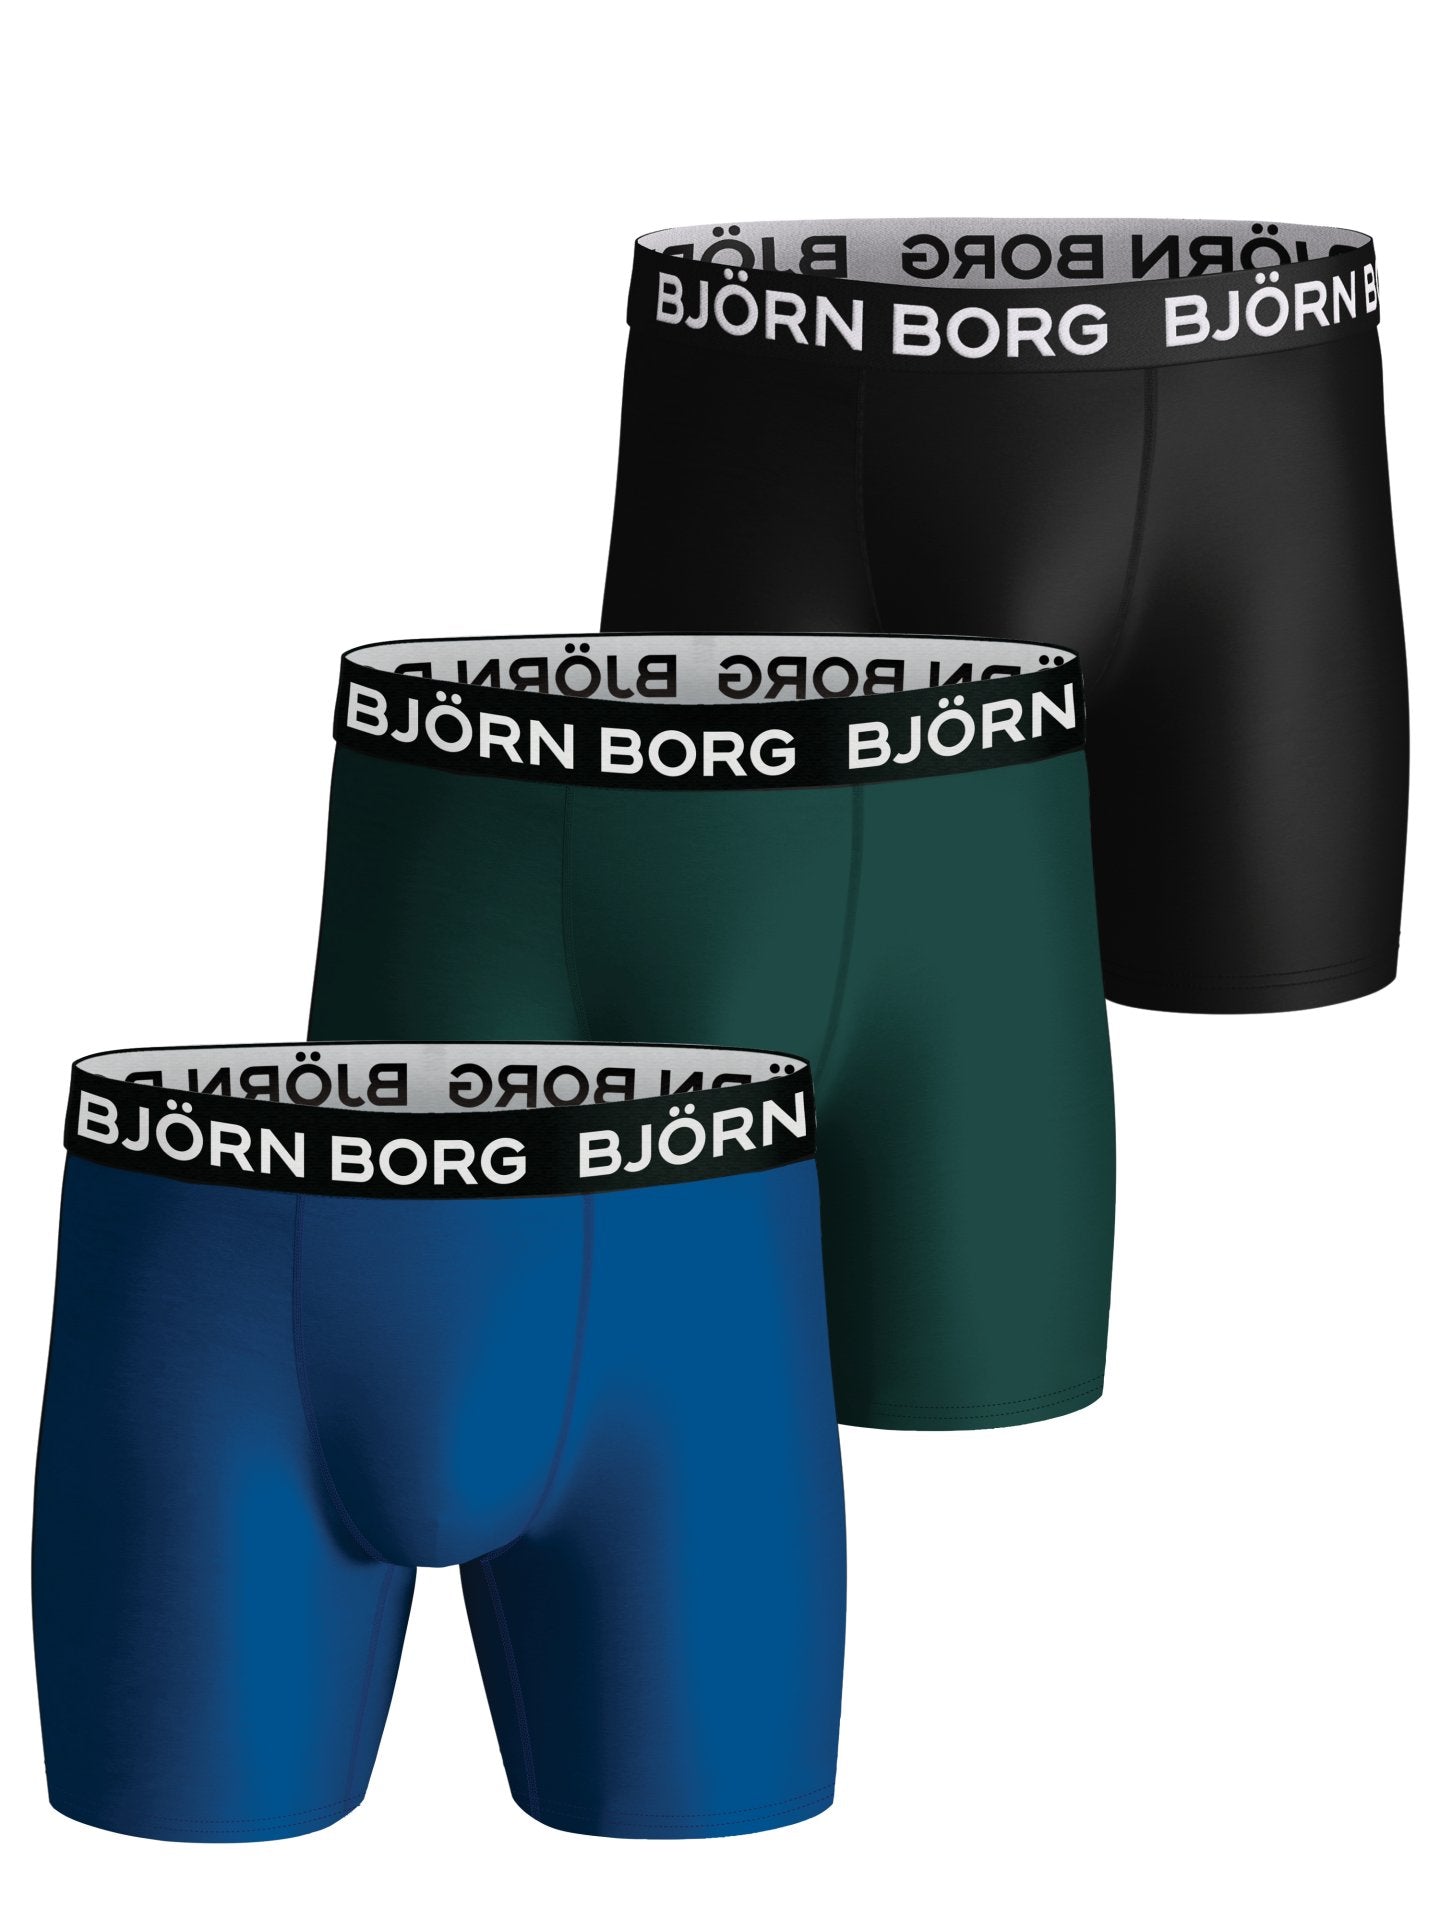 Bjorn Borg Performance Boxer (3-Pack) - Black, Navy Blue, Orange –